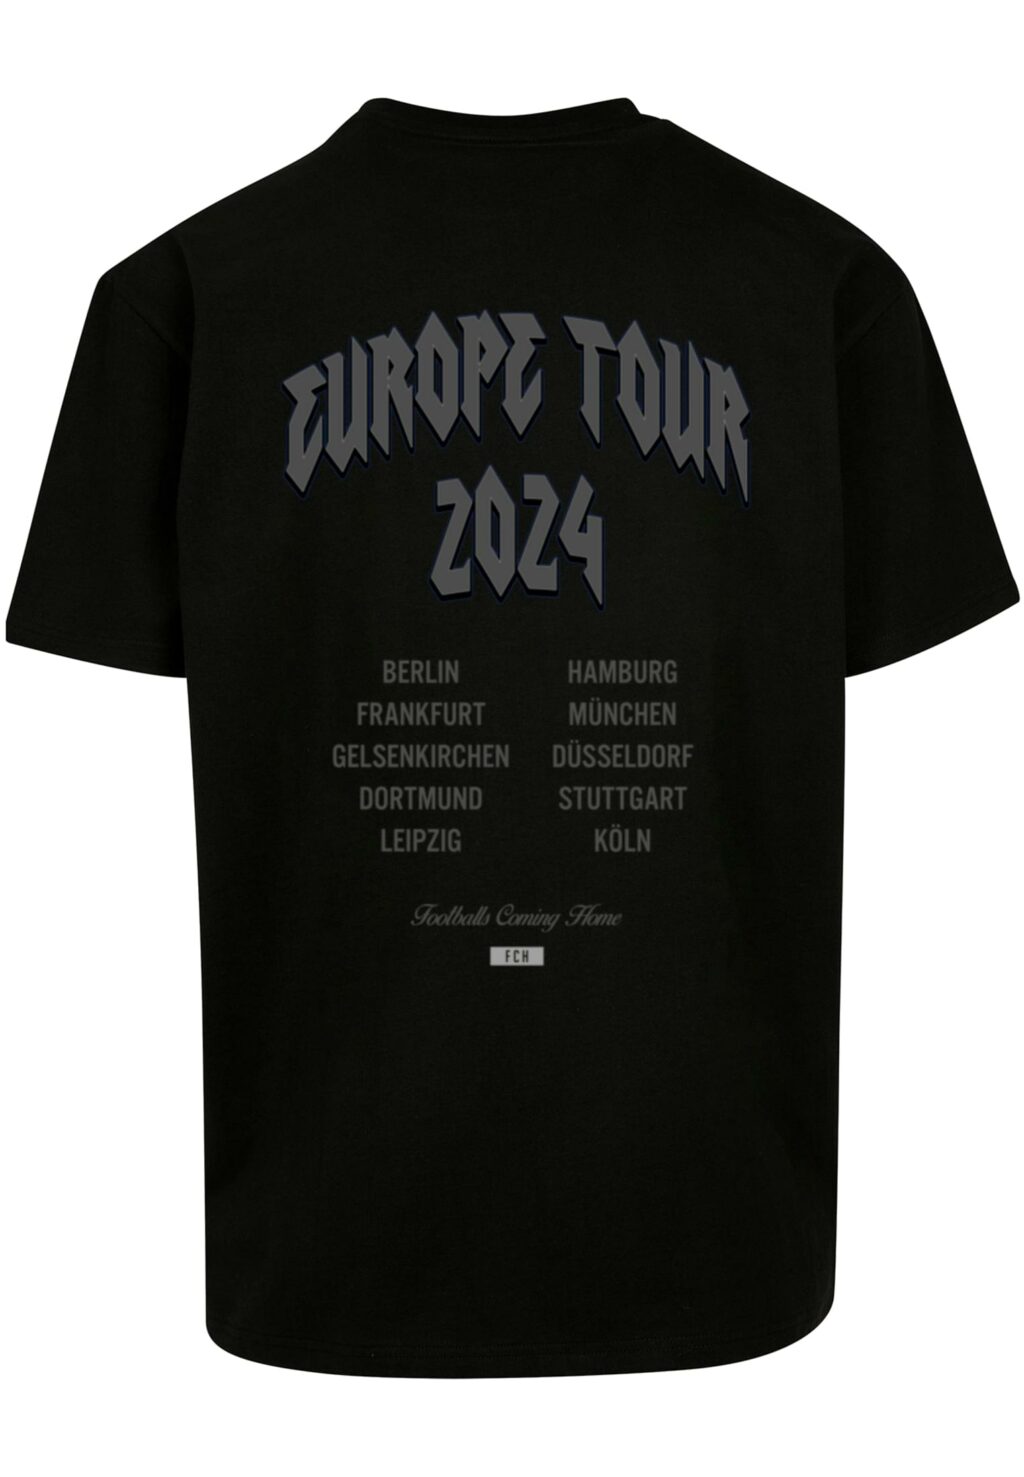 Football's Coming Home 2024 Europe Tour Oversize Tee black MT3125